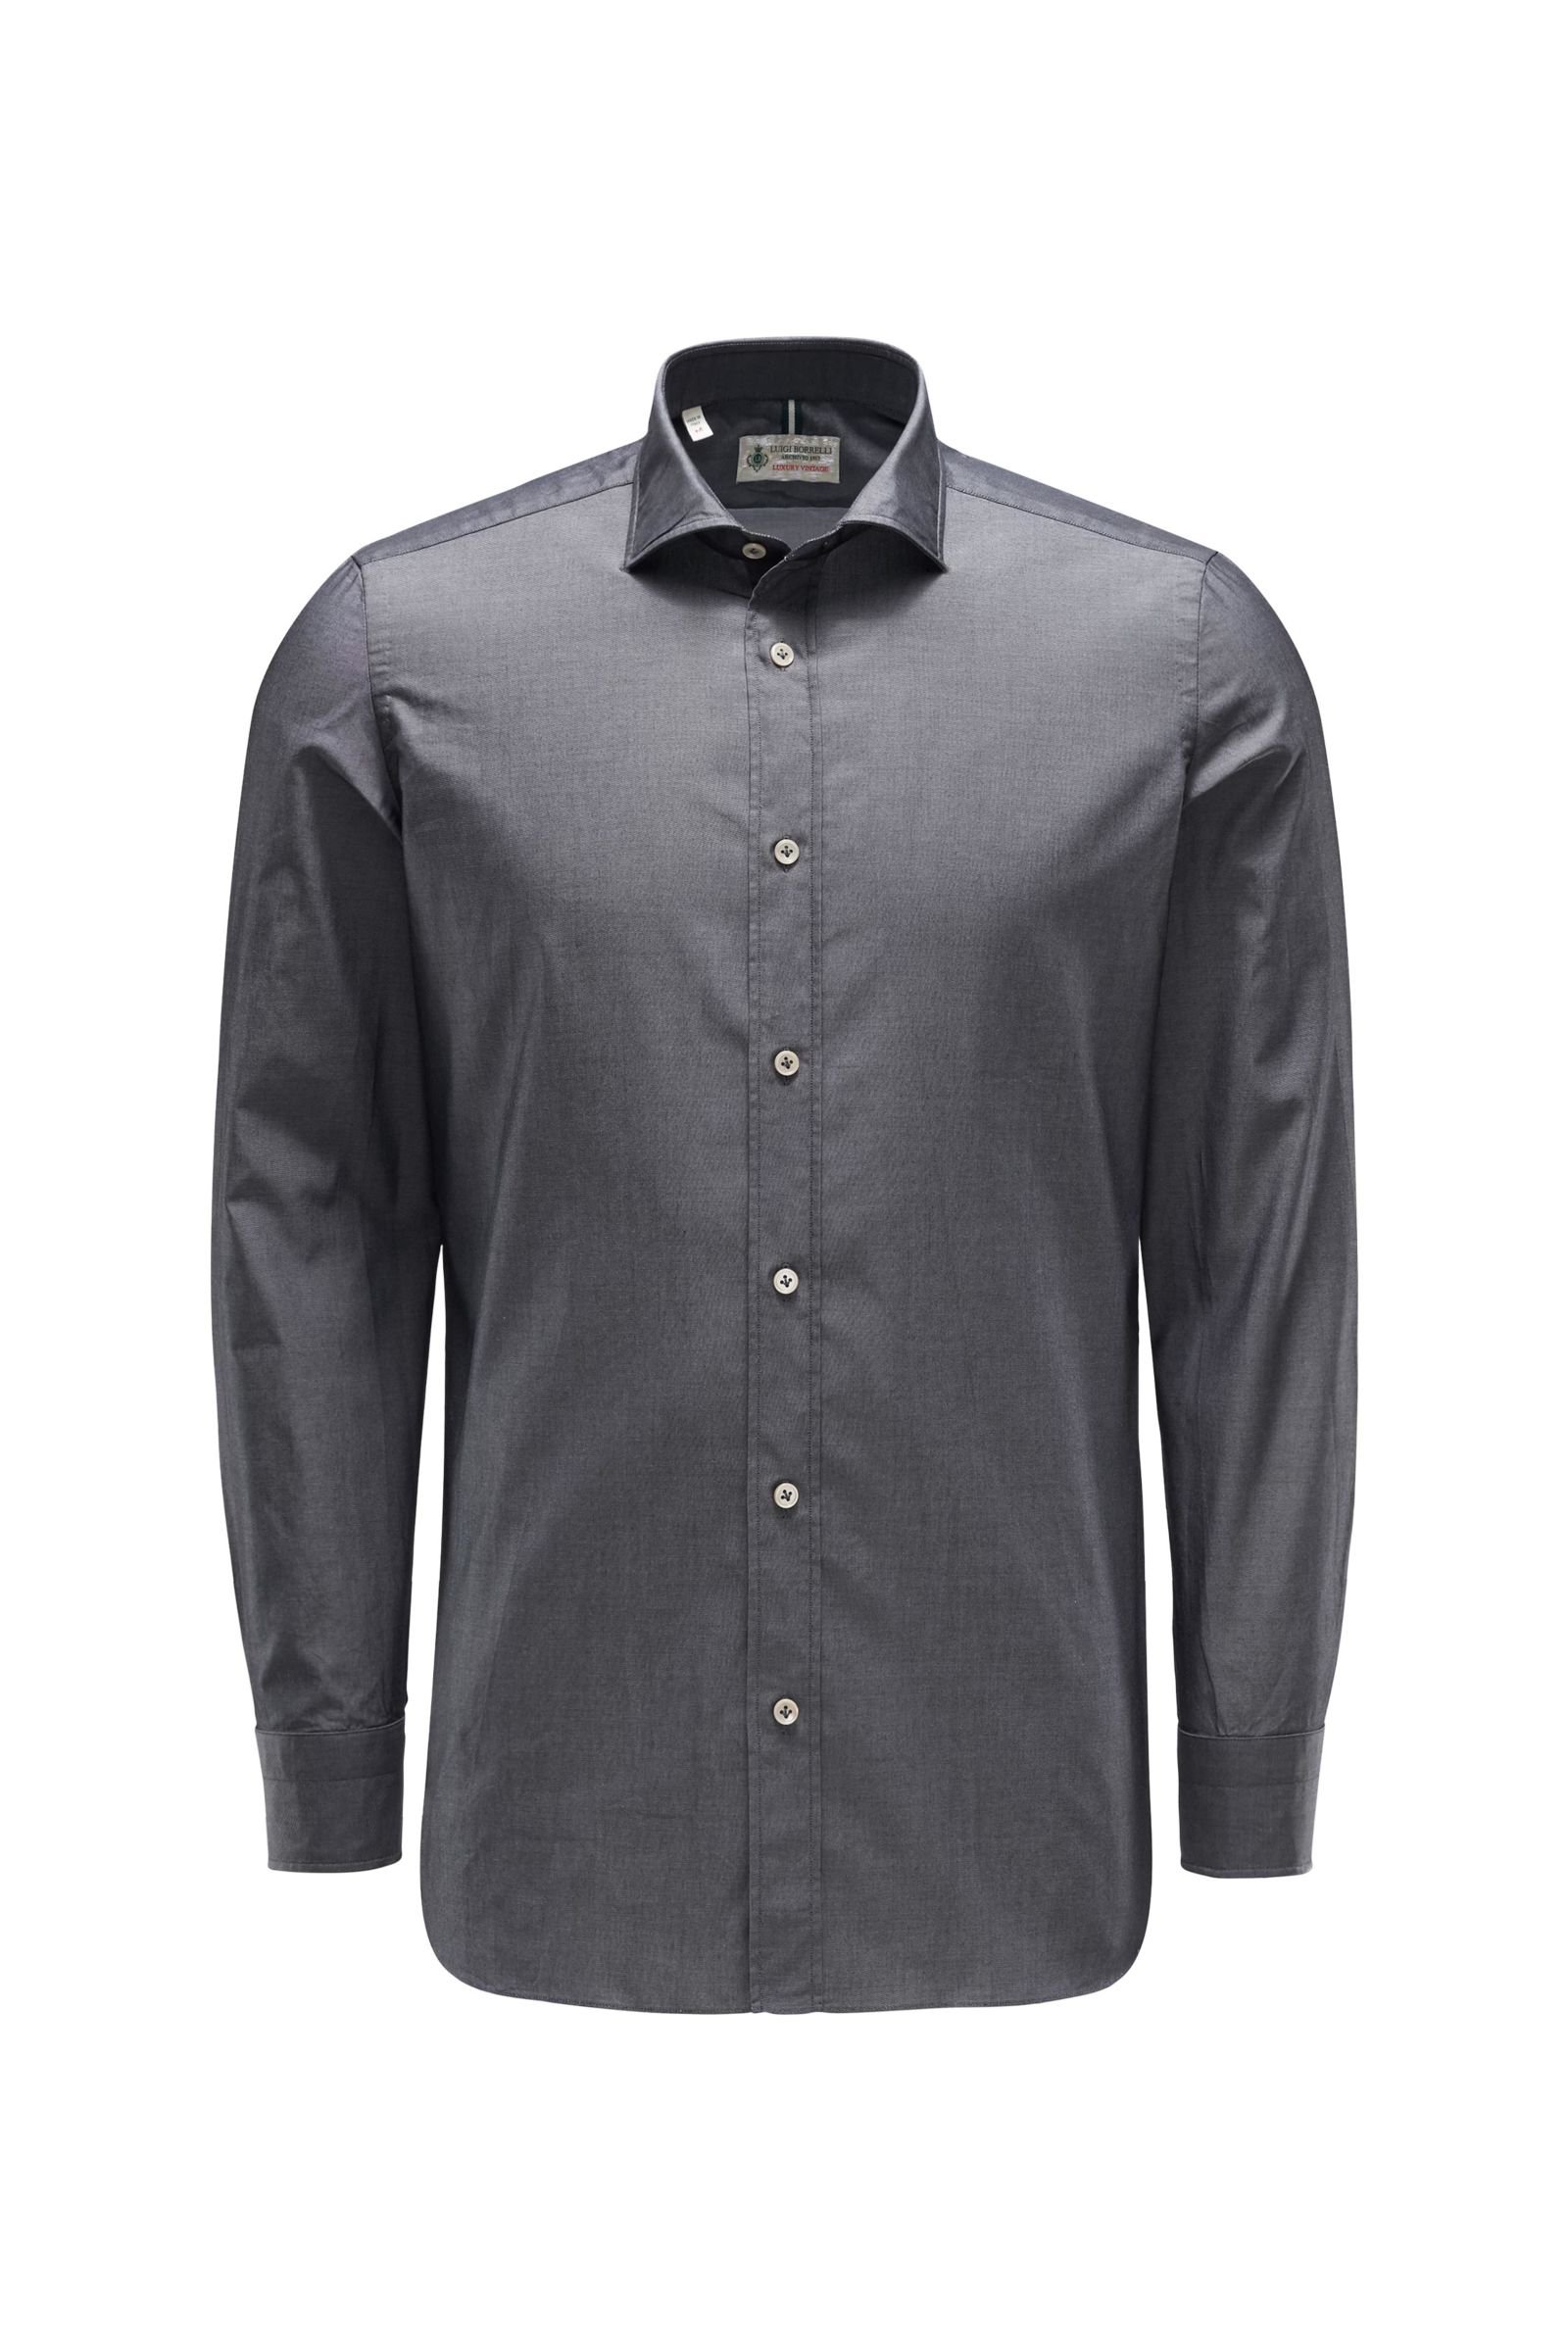 Chambray shirt slim collar dark grey